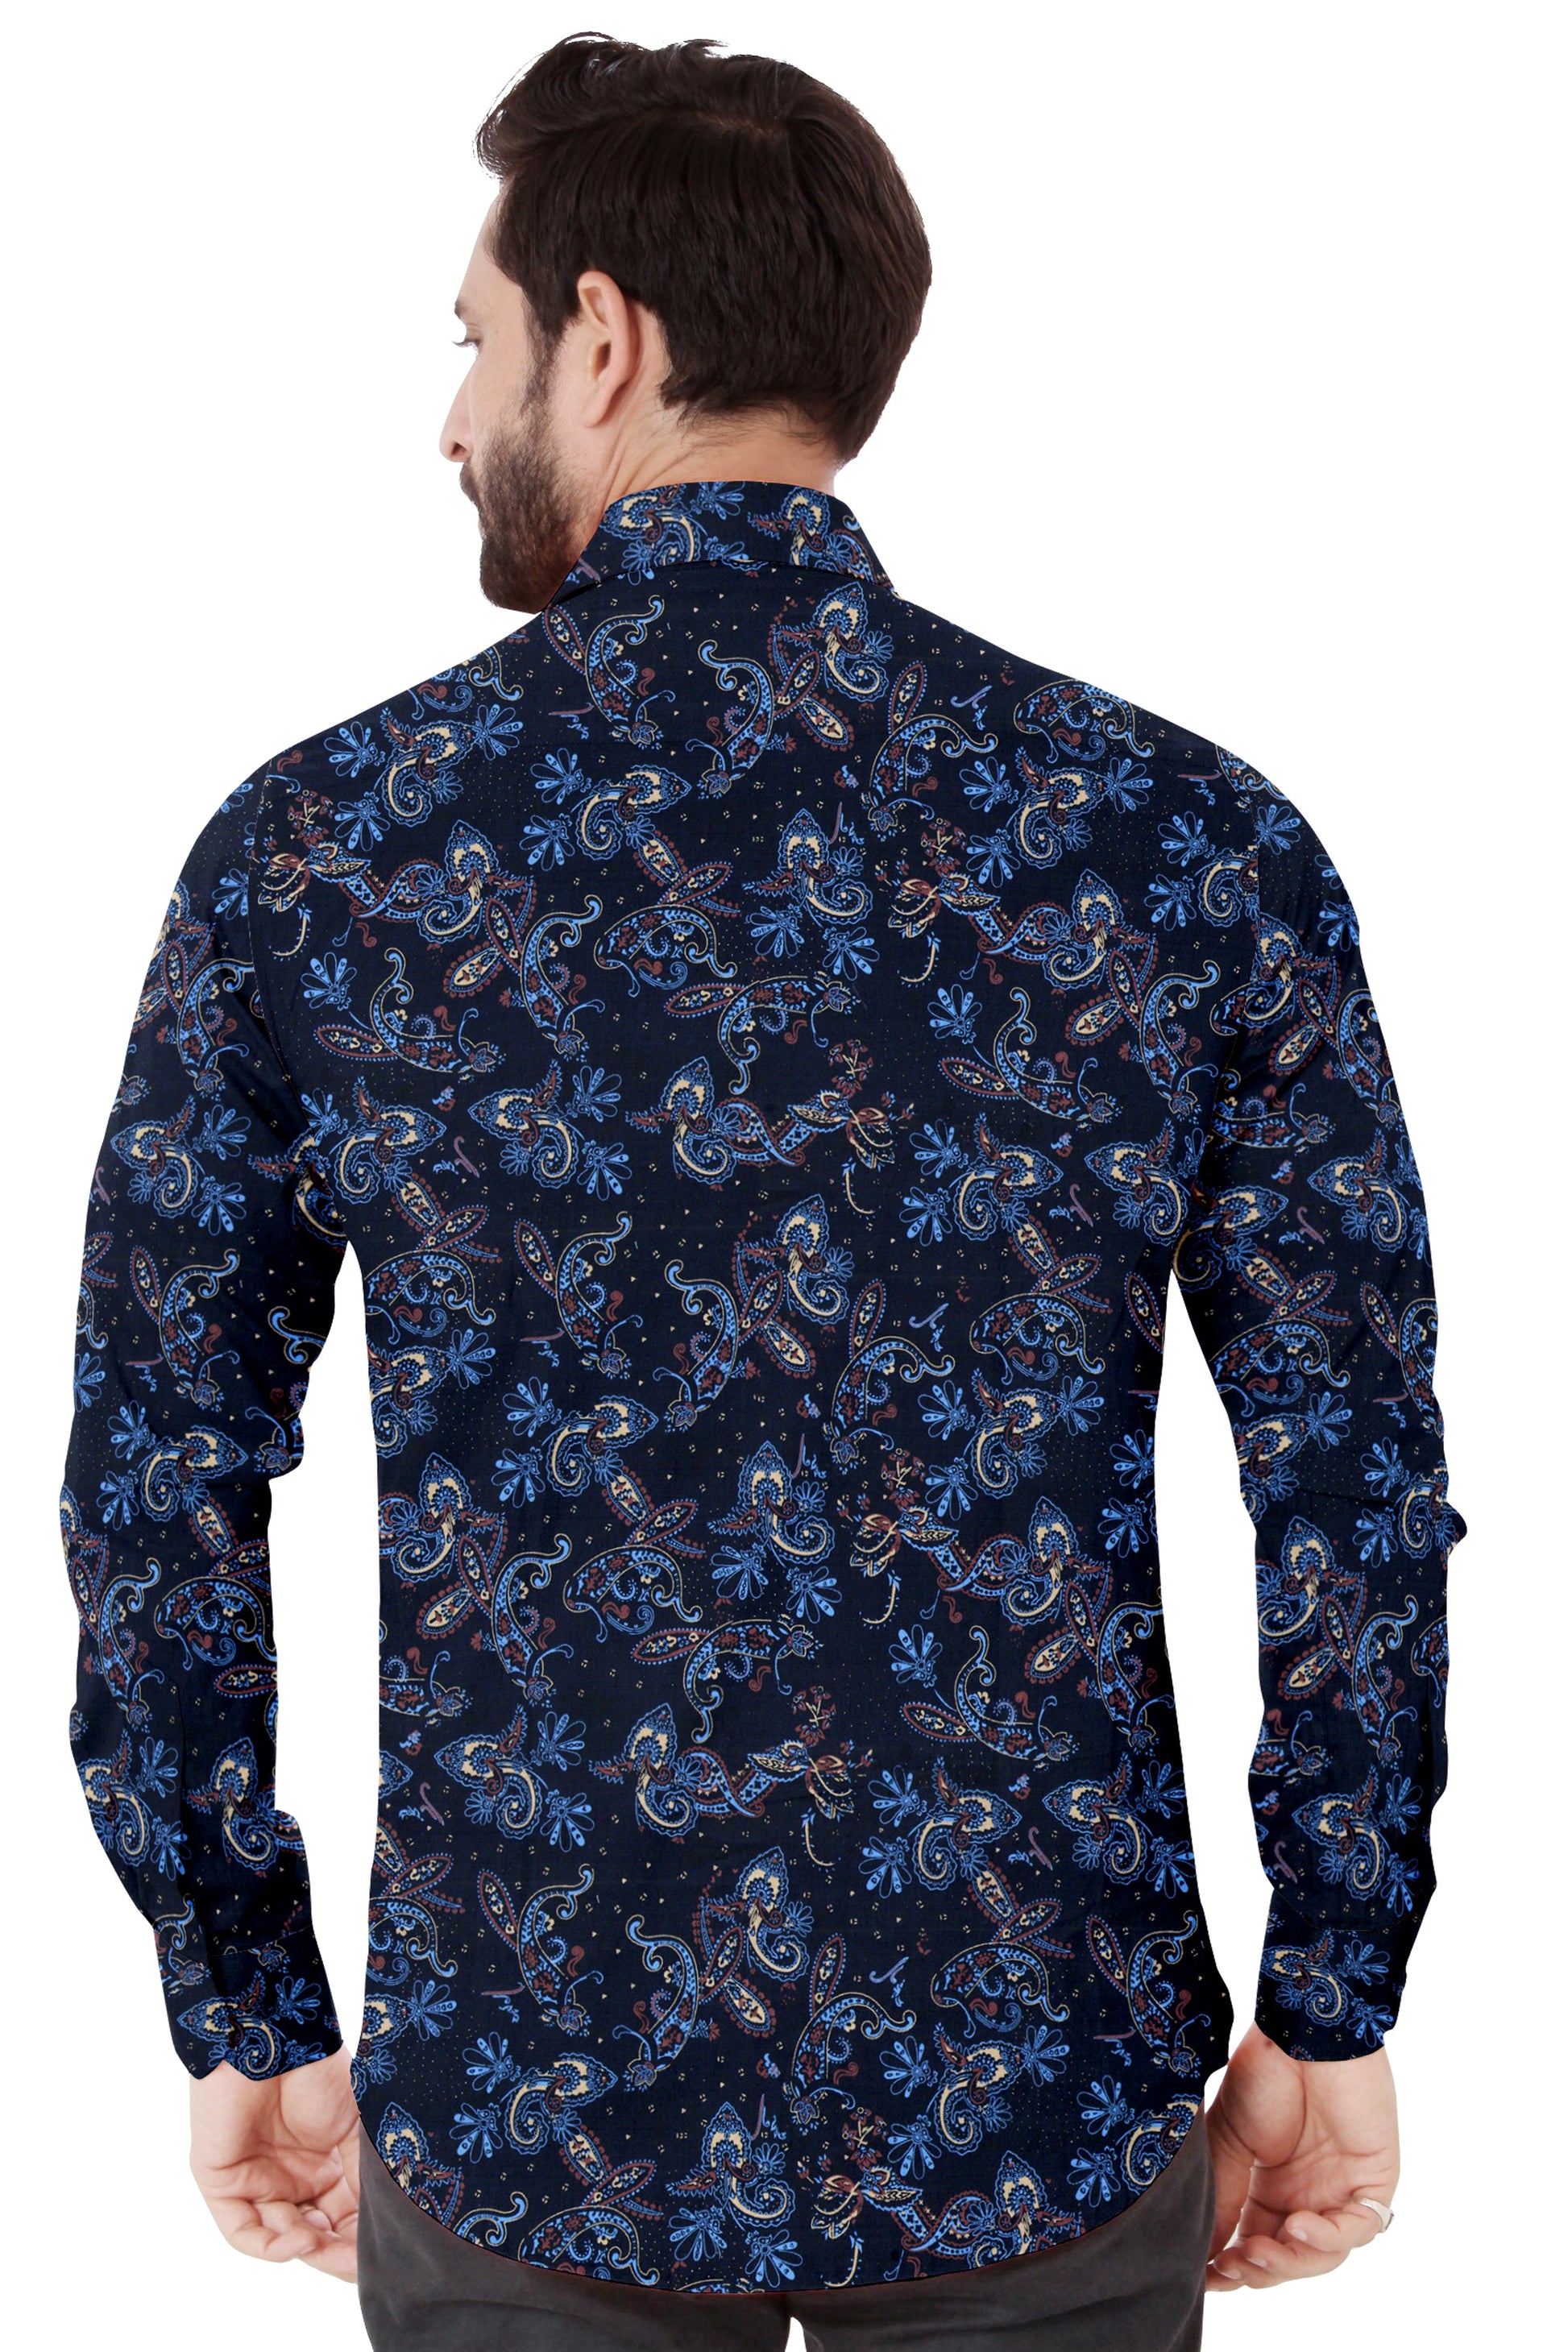 Men's Dark Blue Printed Casual Shirt Full Sleeves 100% Cotton - Styleflea